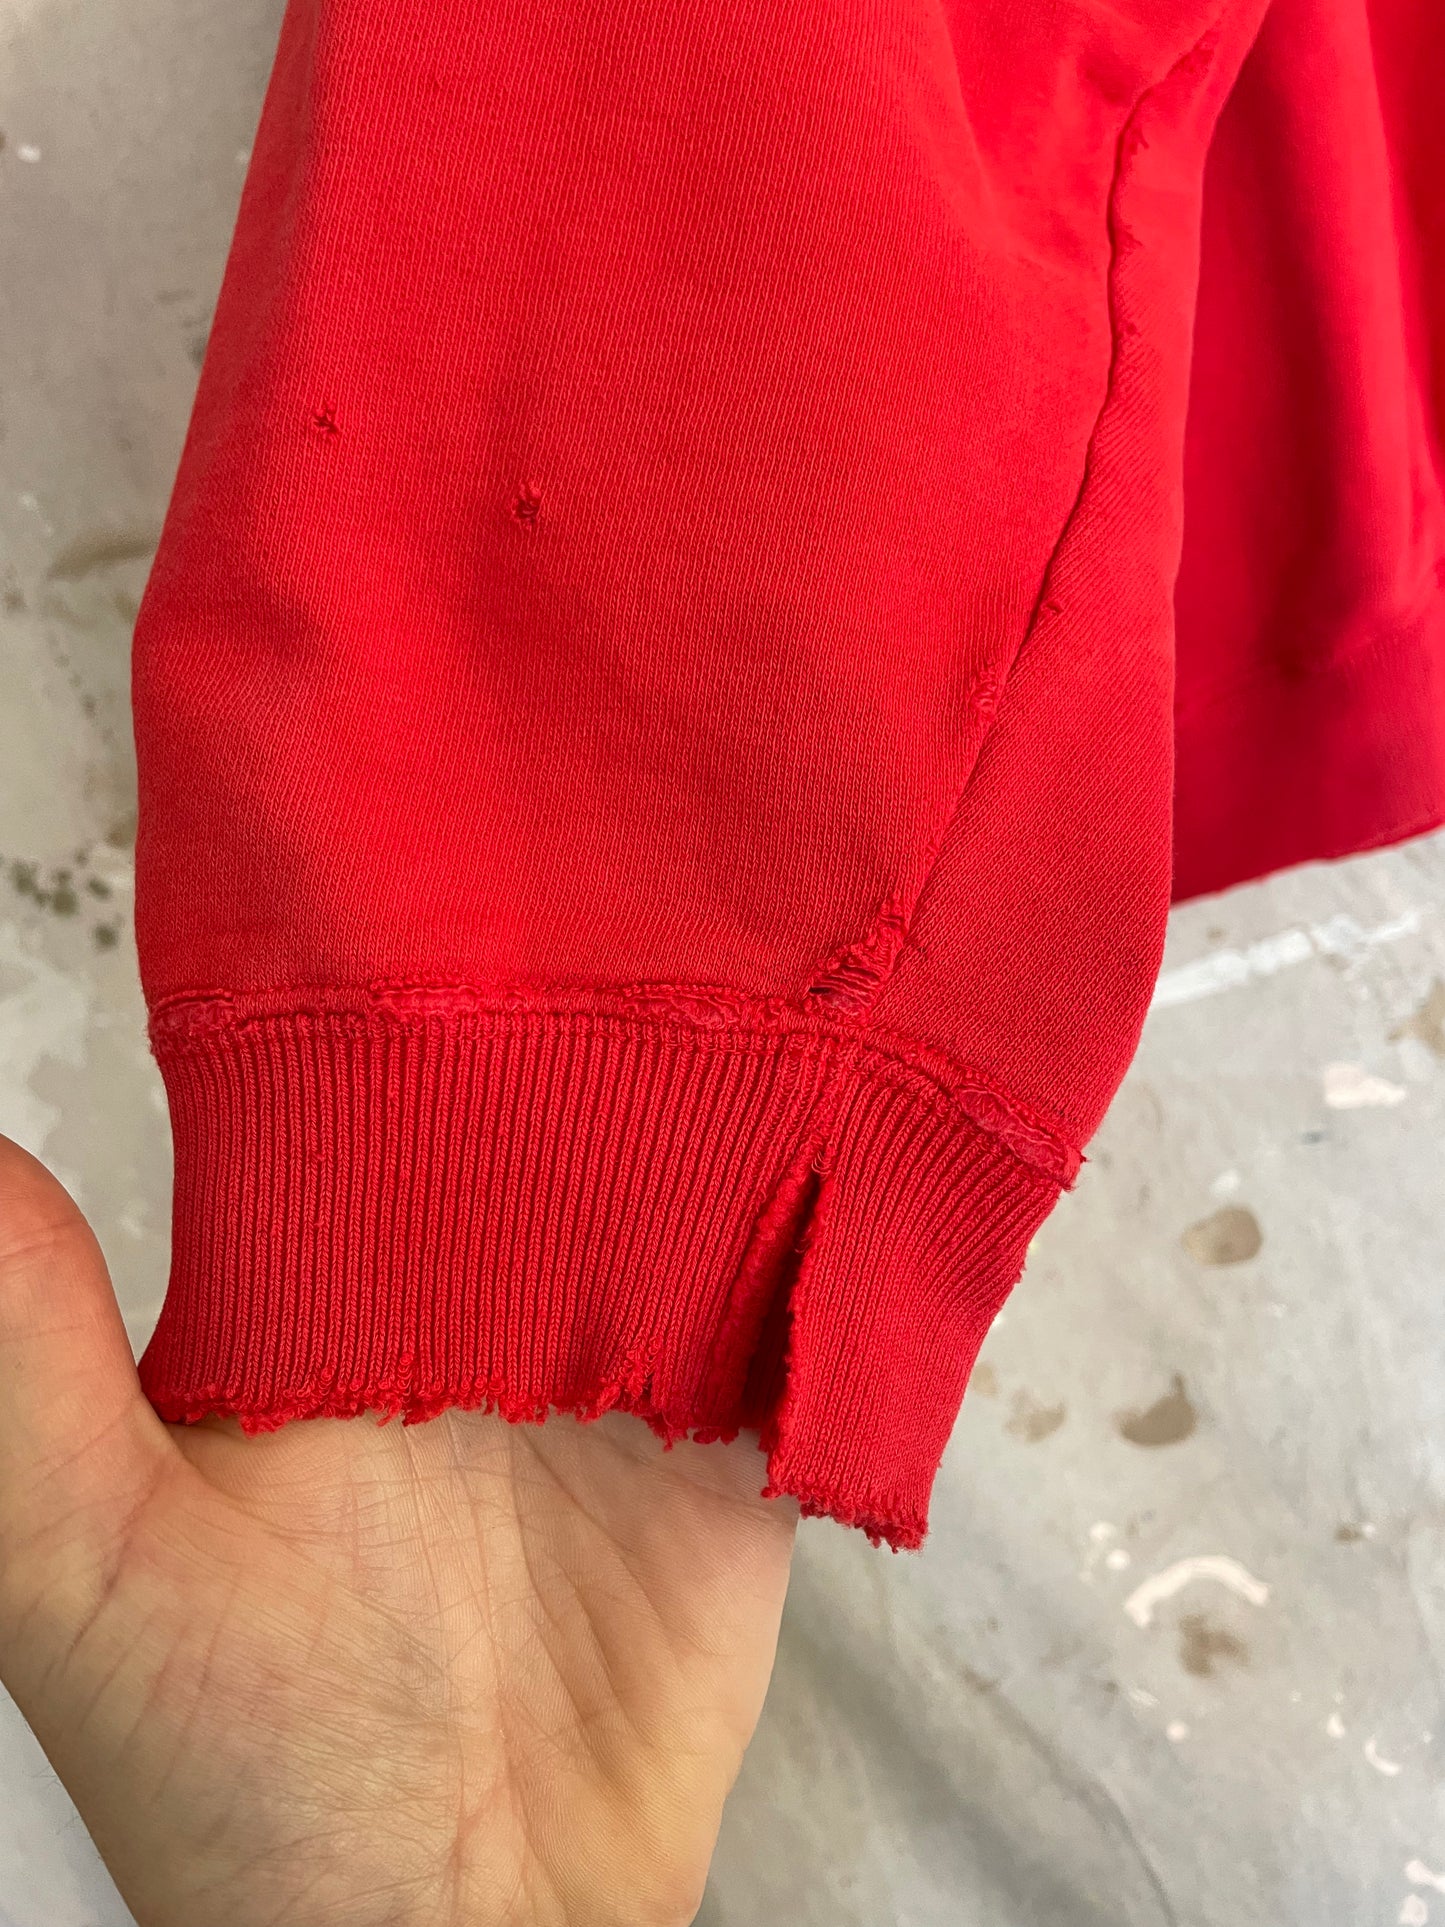 90s Blank Red Gap Sweatshirt